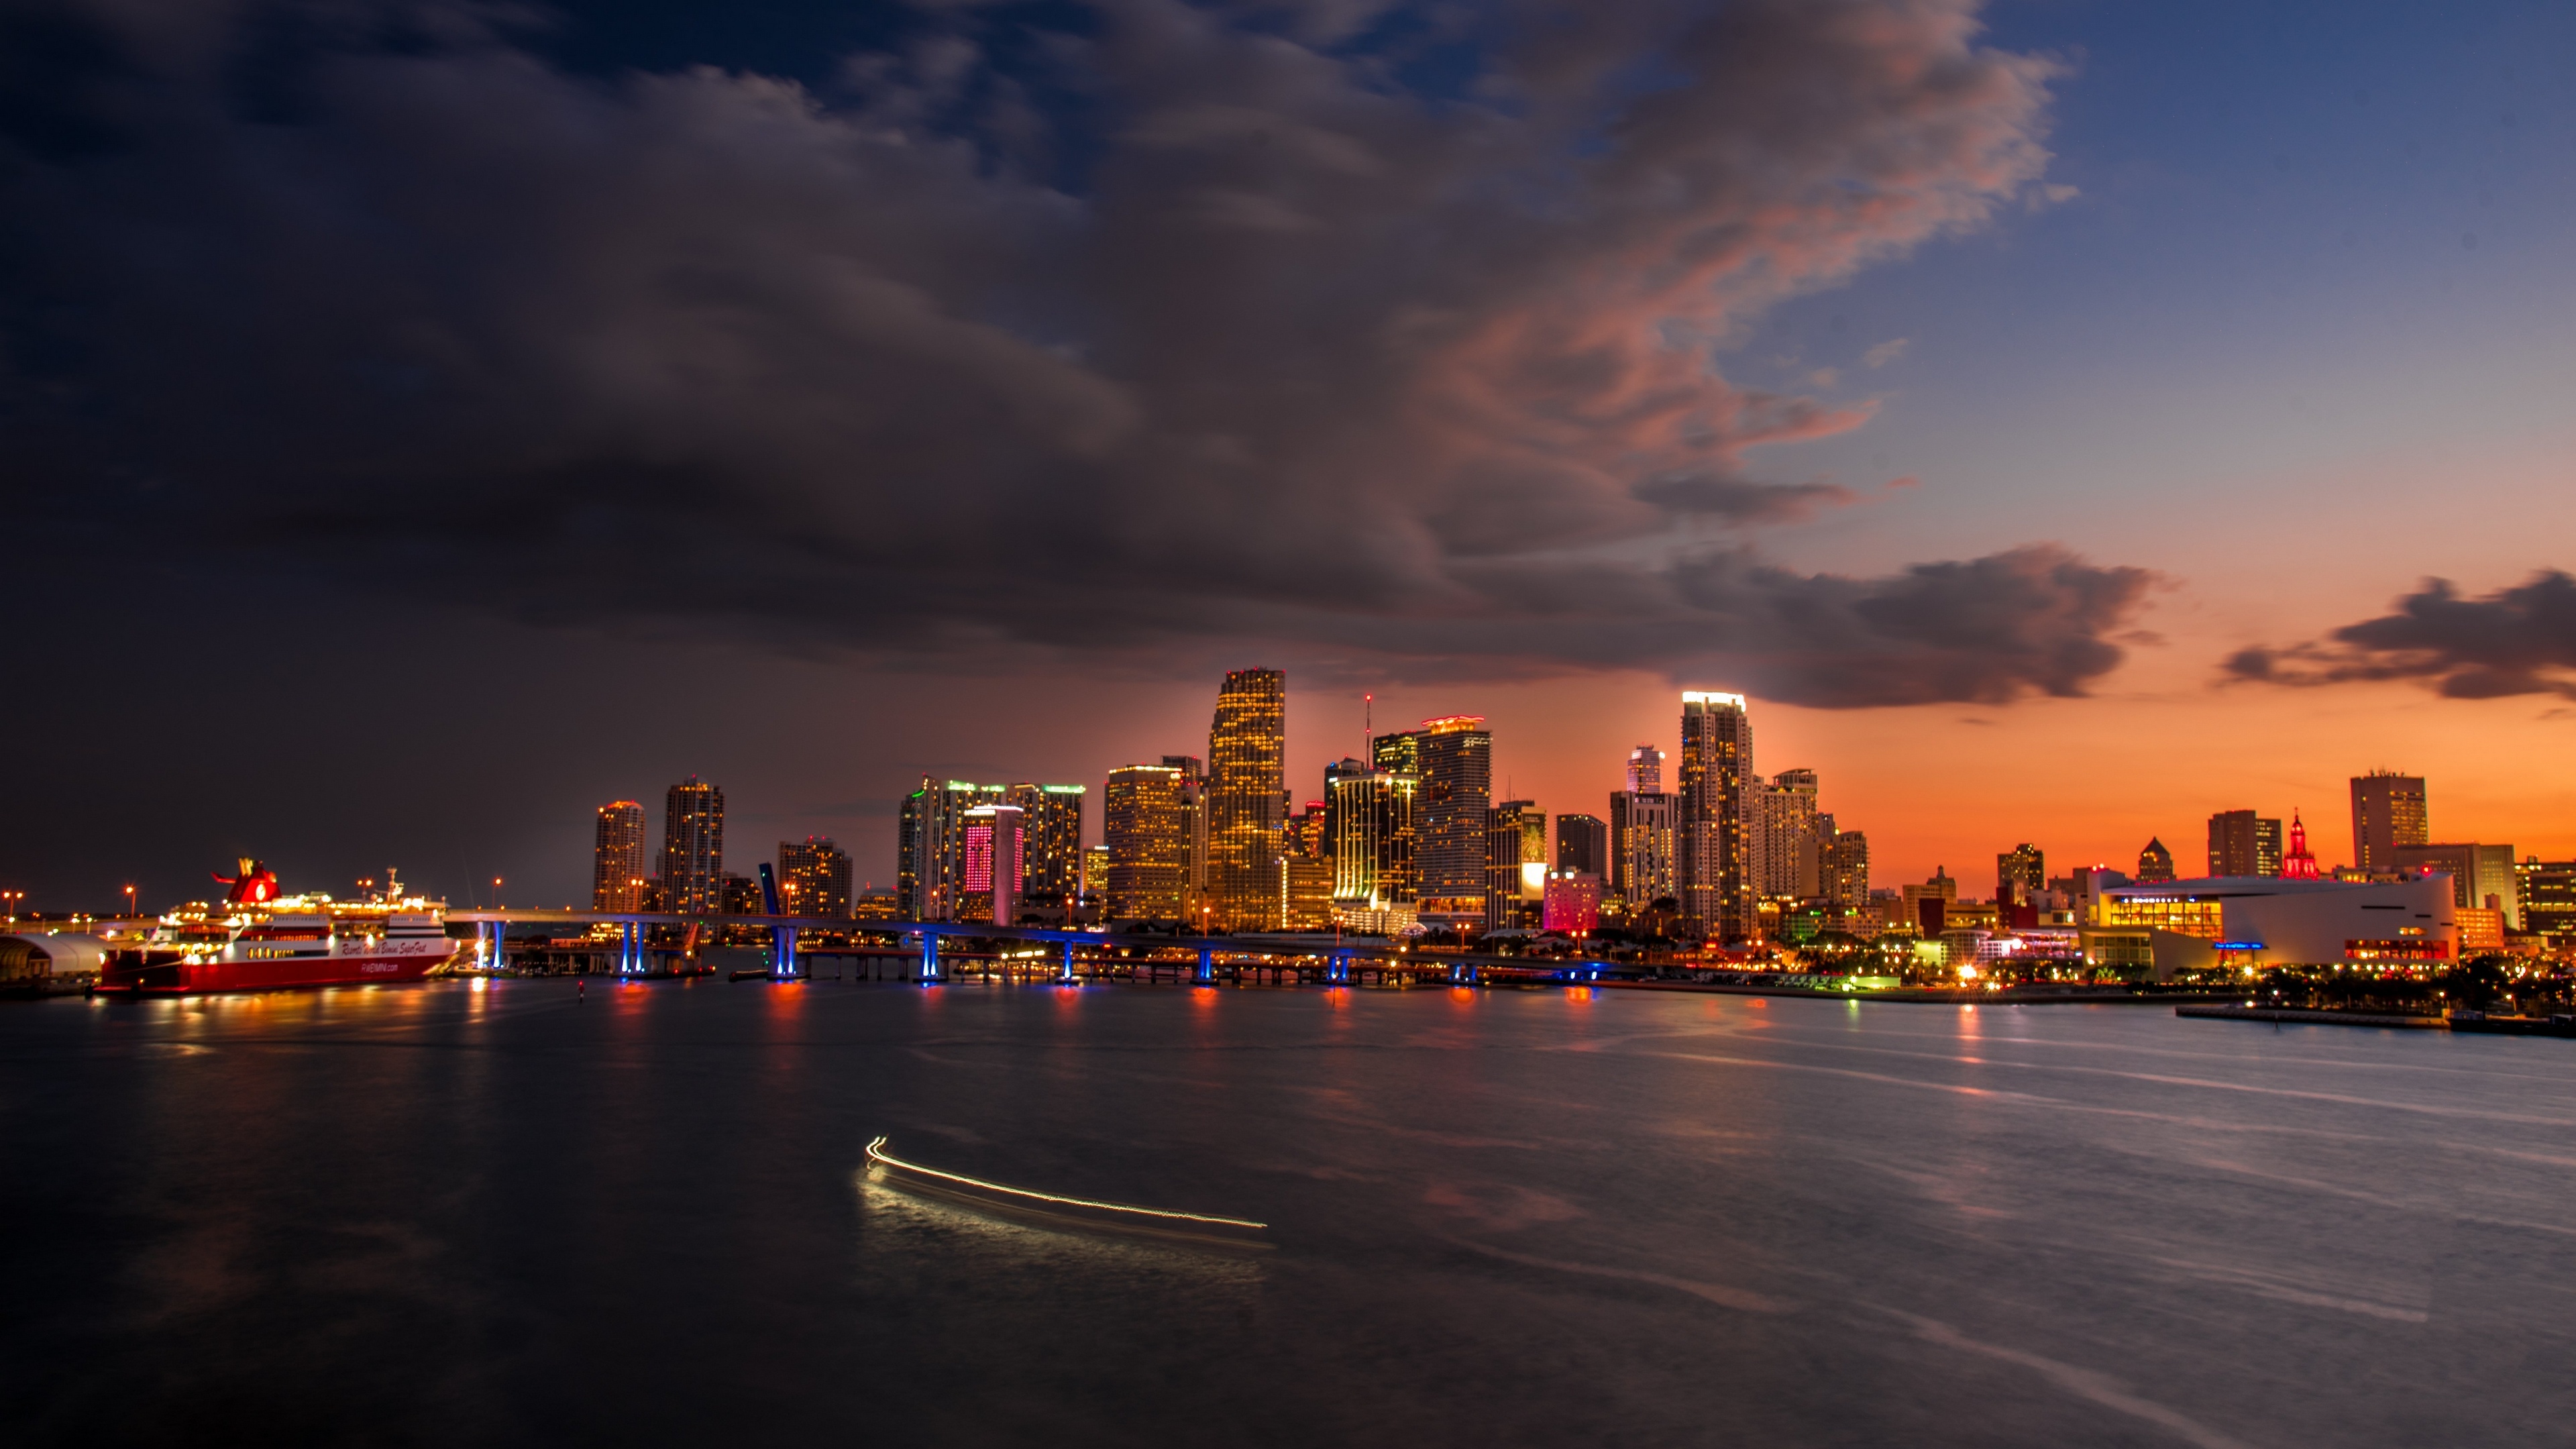 Miami travels, Night city wallpaper, USA skyscrapers, Urban lights, 3840x2160 4K Desktop